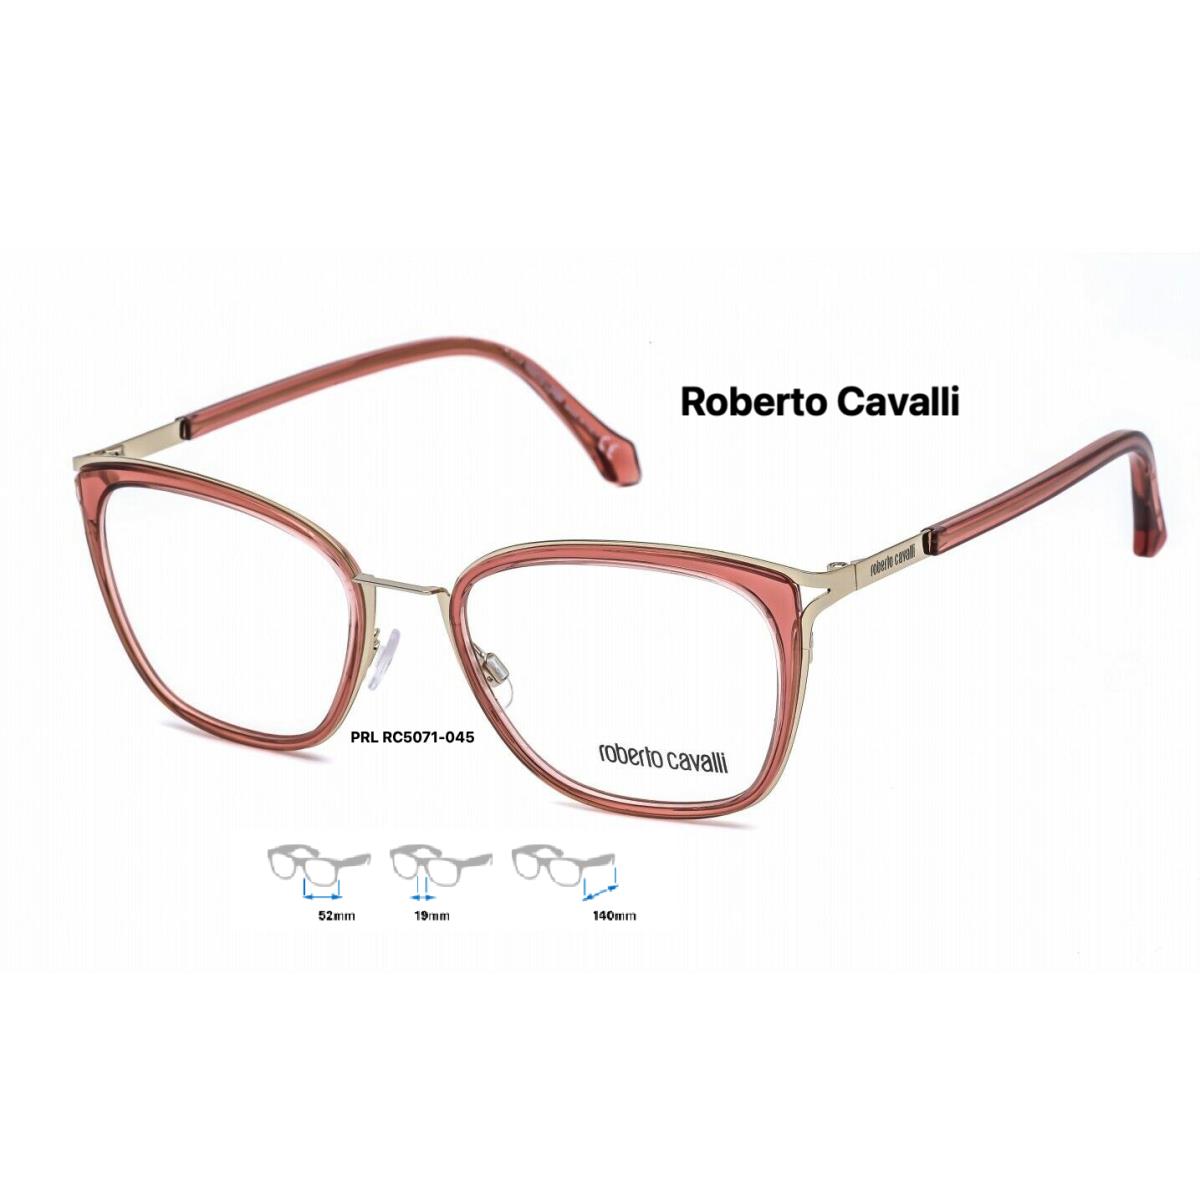 Roberto Cavalli Maremma RC5071-045 Eyeglass Frames Pink/gold Size 52mm